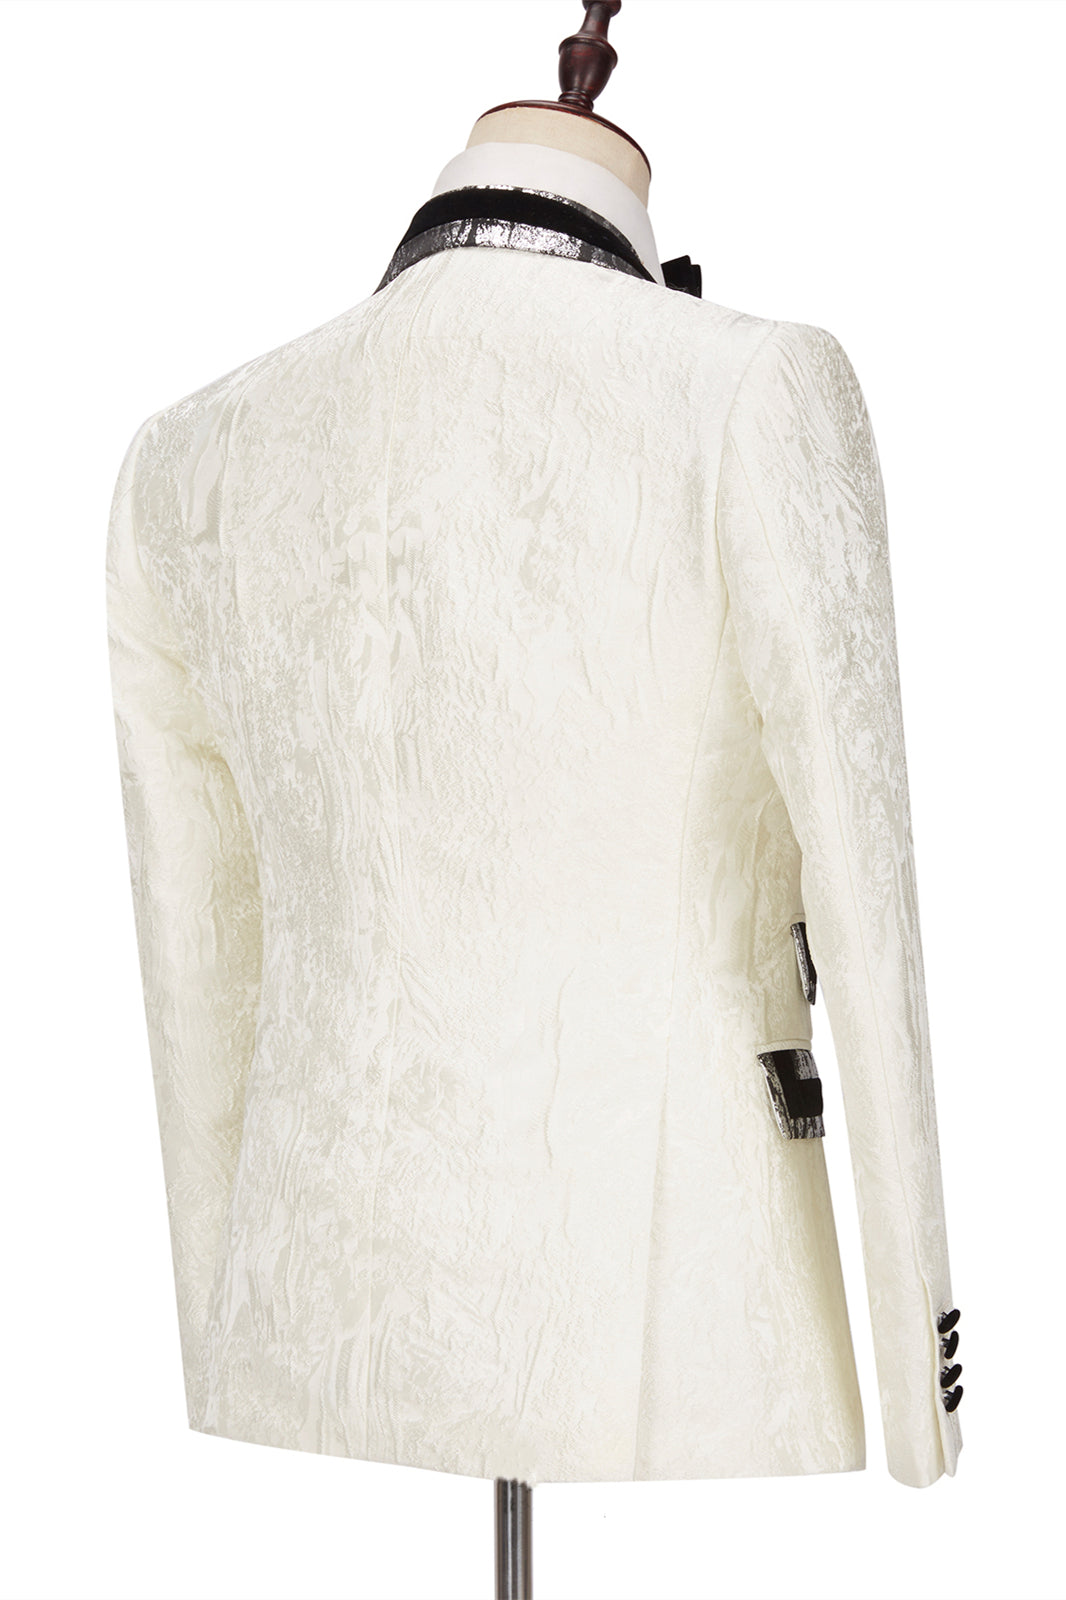 Classic White Jacquard Silver Gray Lapel Flaps Men's Suit with Black Banding Edge-Wedding Suits-BallBride